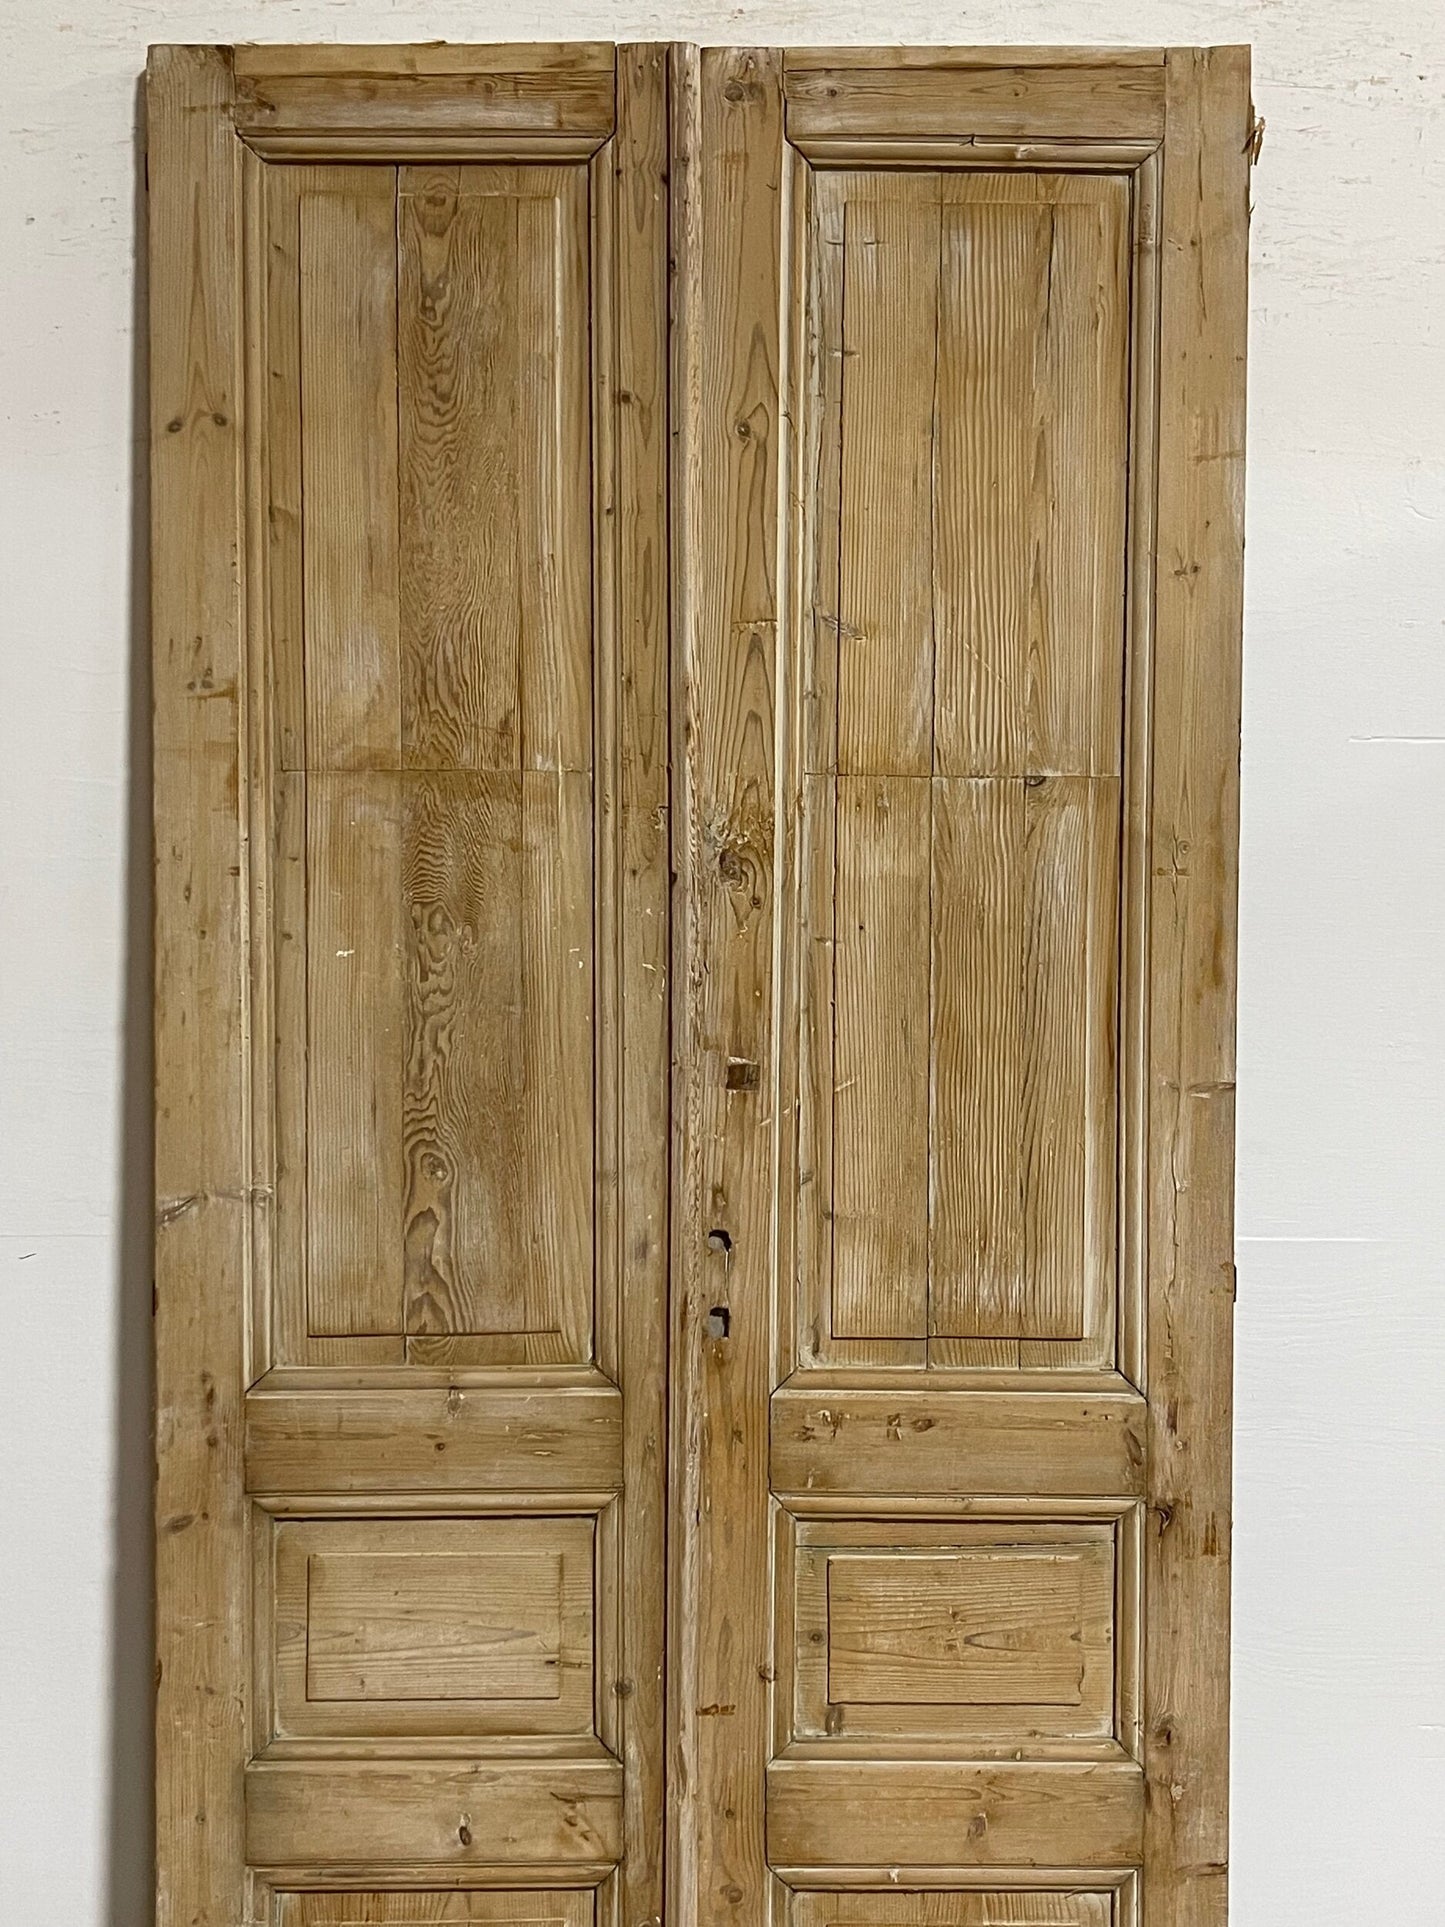 Antique French panel doors (92.25x39.25) I125